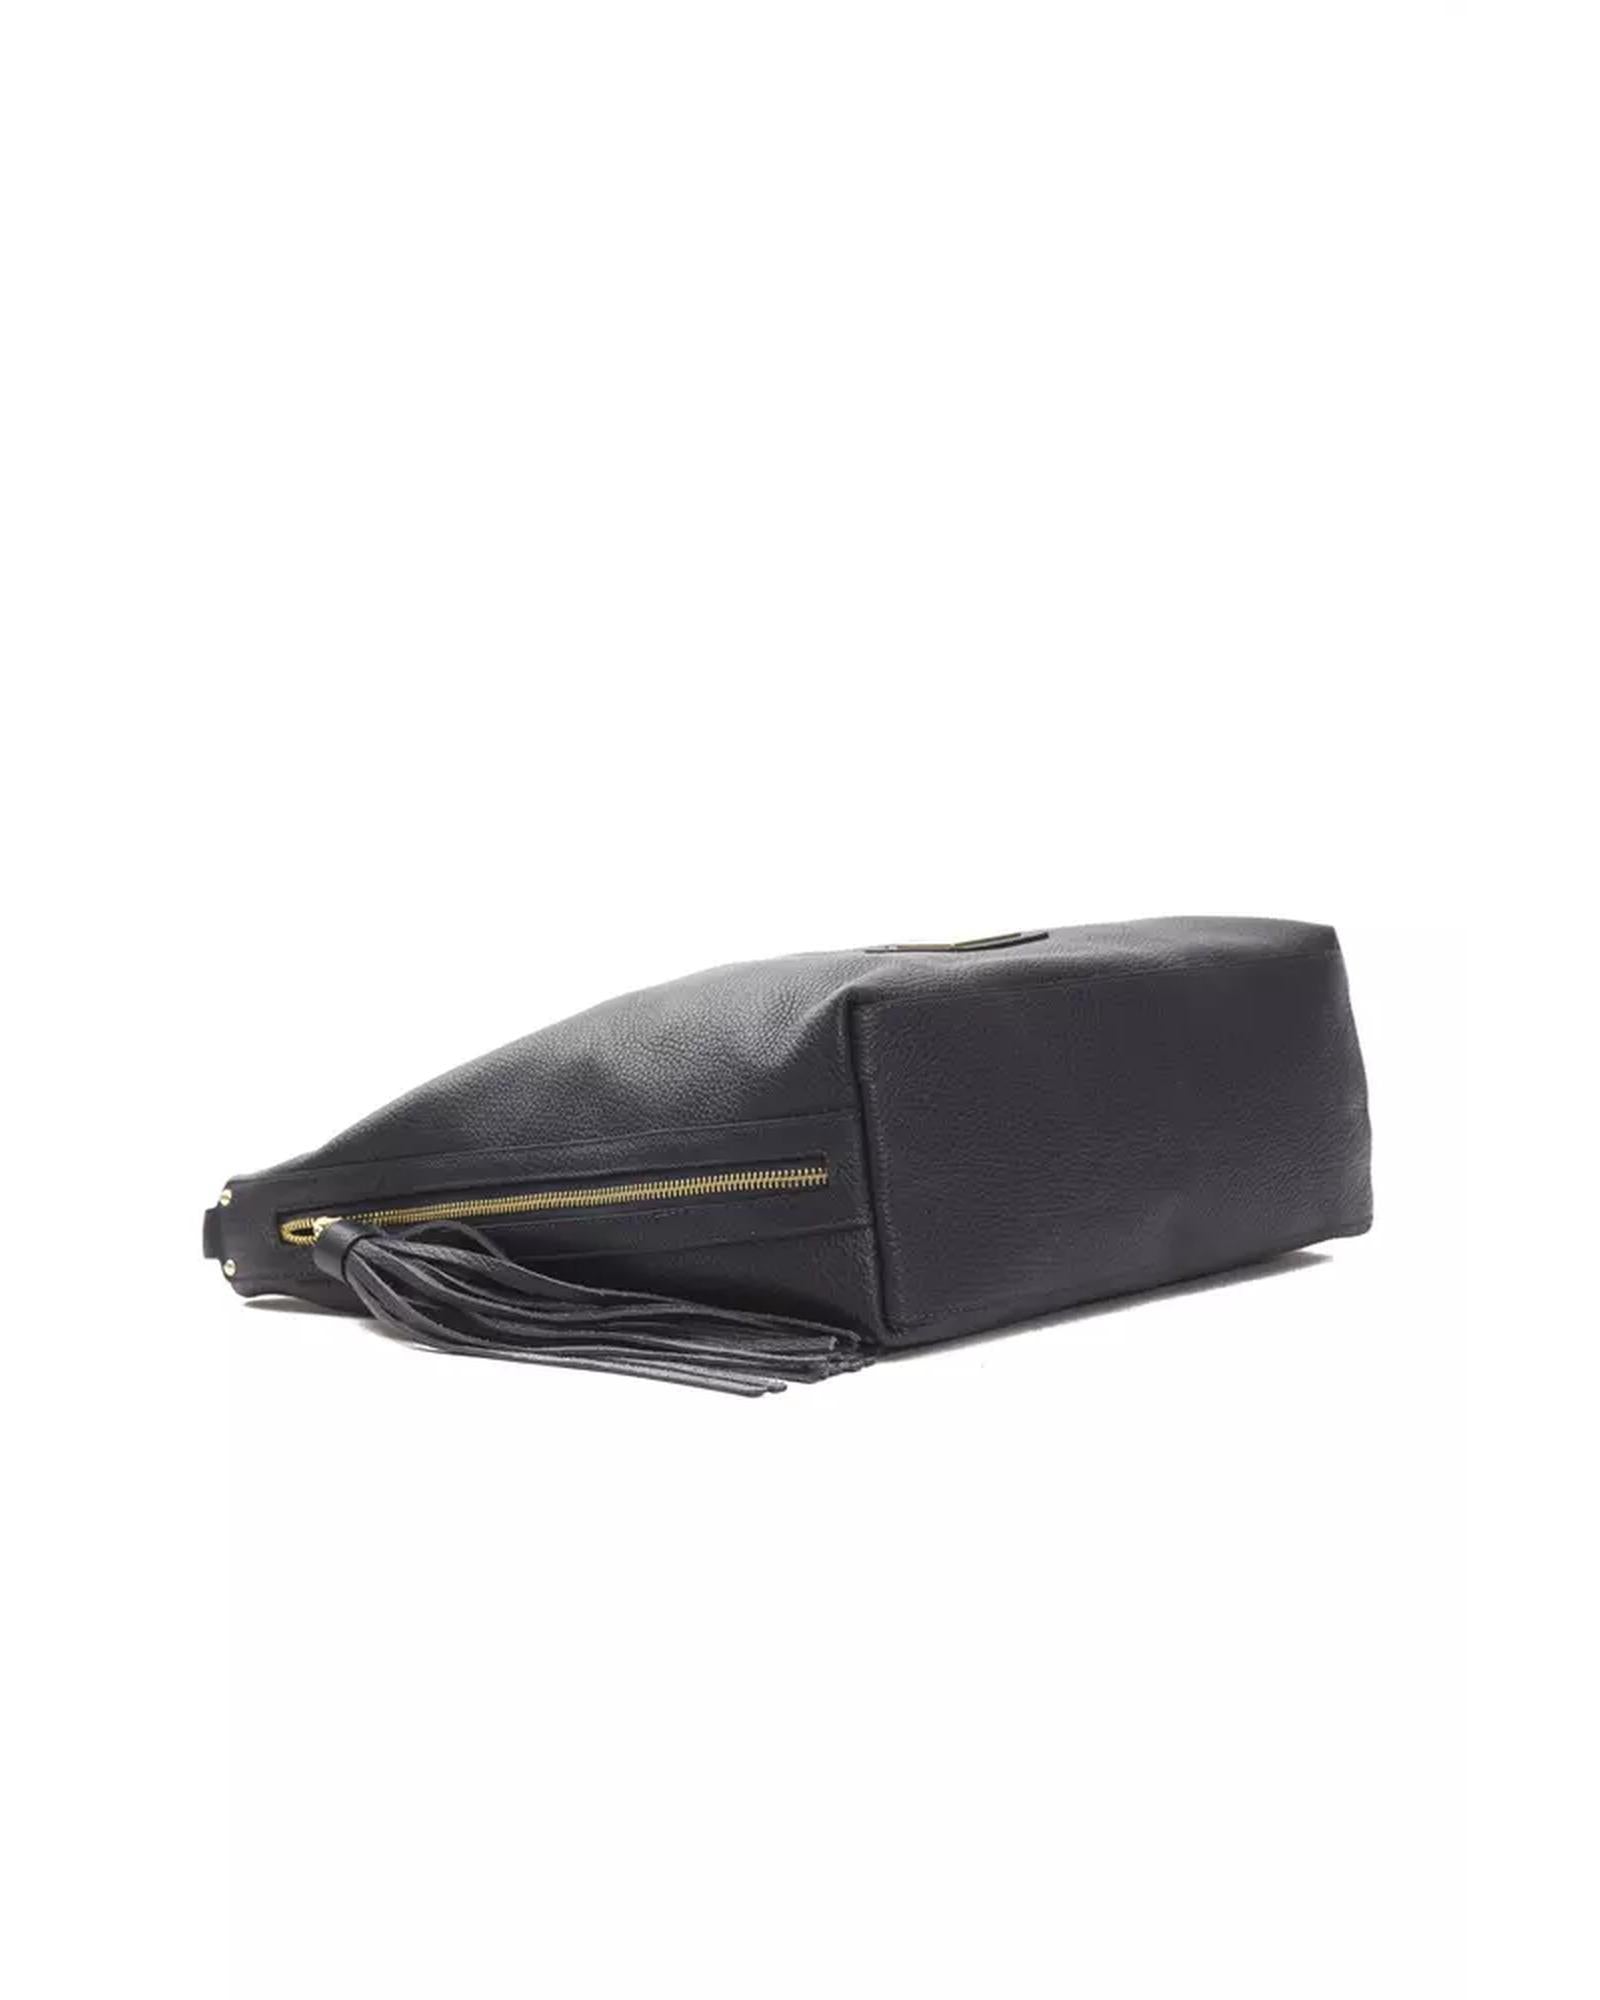 Leather Shoulder Bag with Adjustable Strap One Size Women